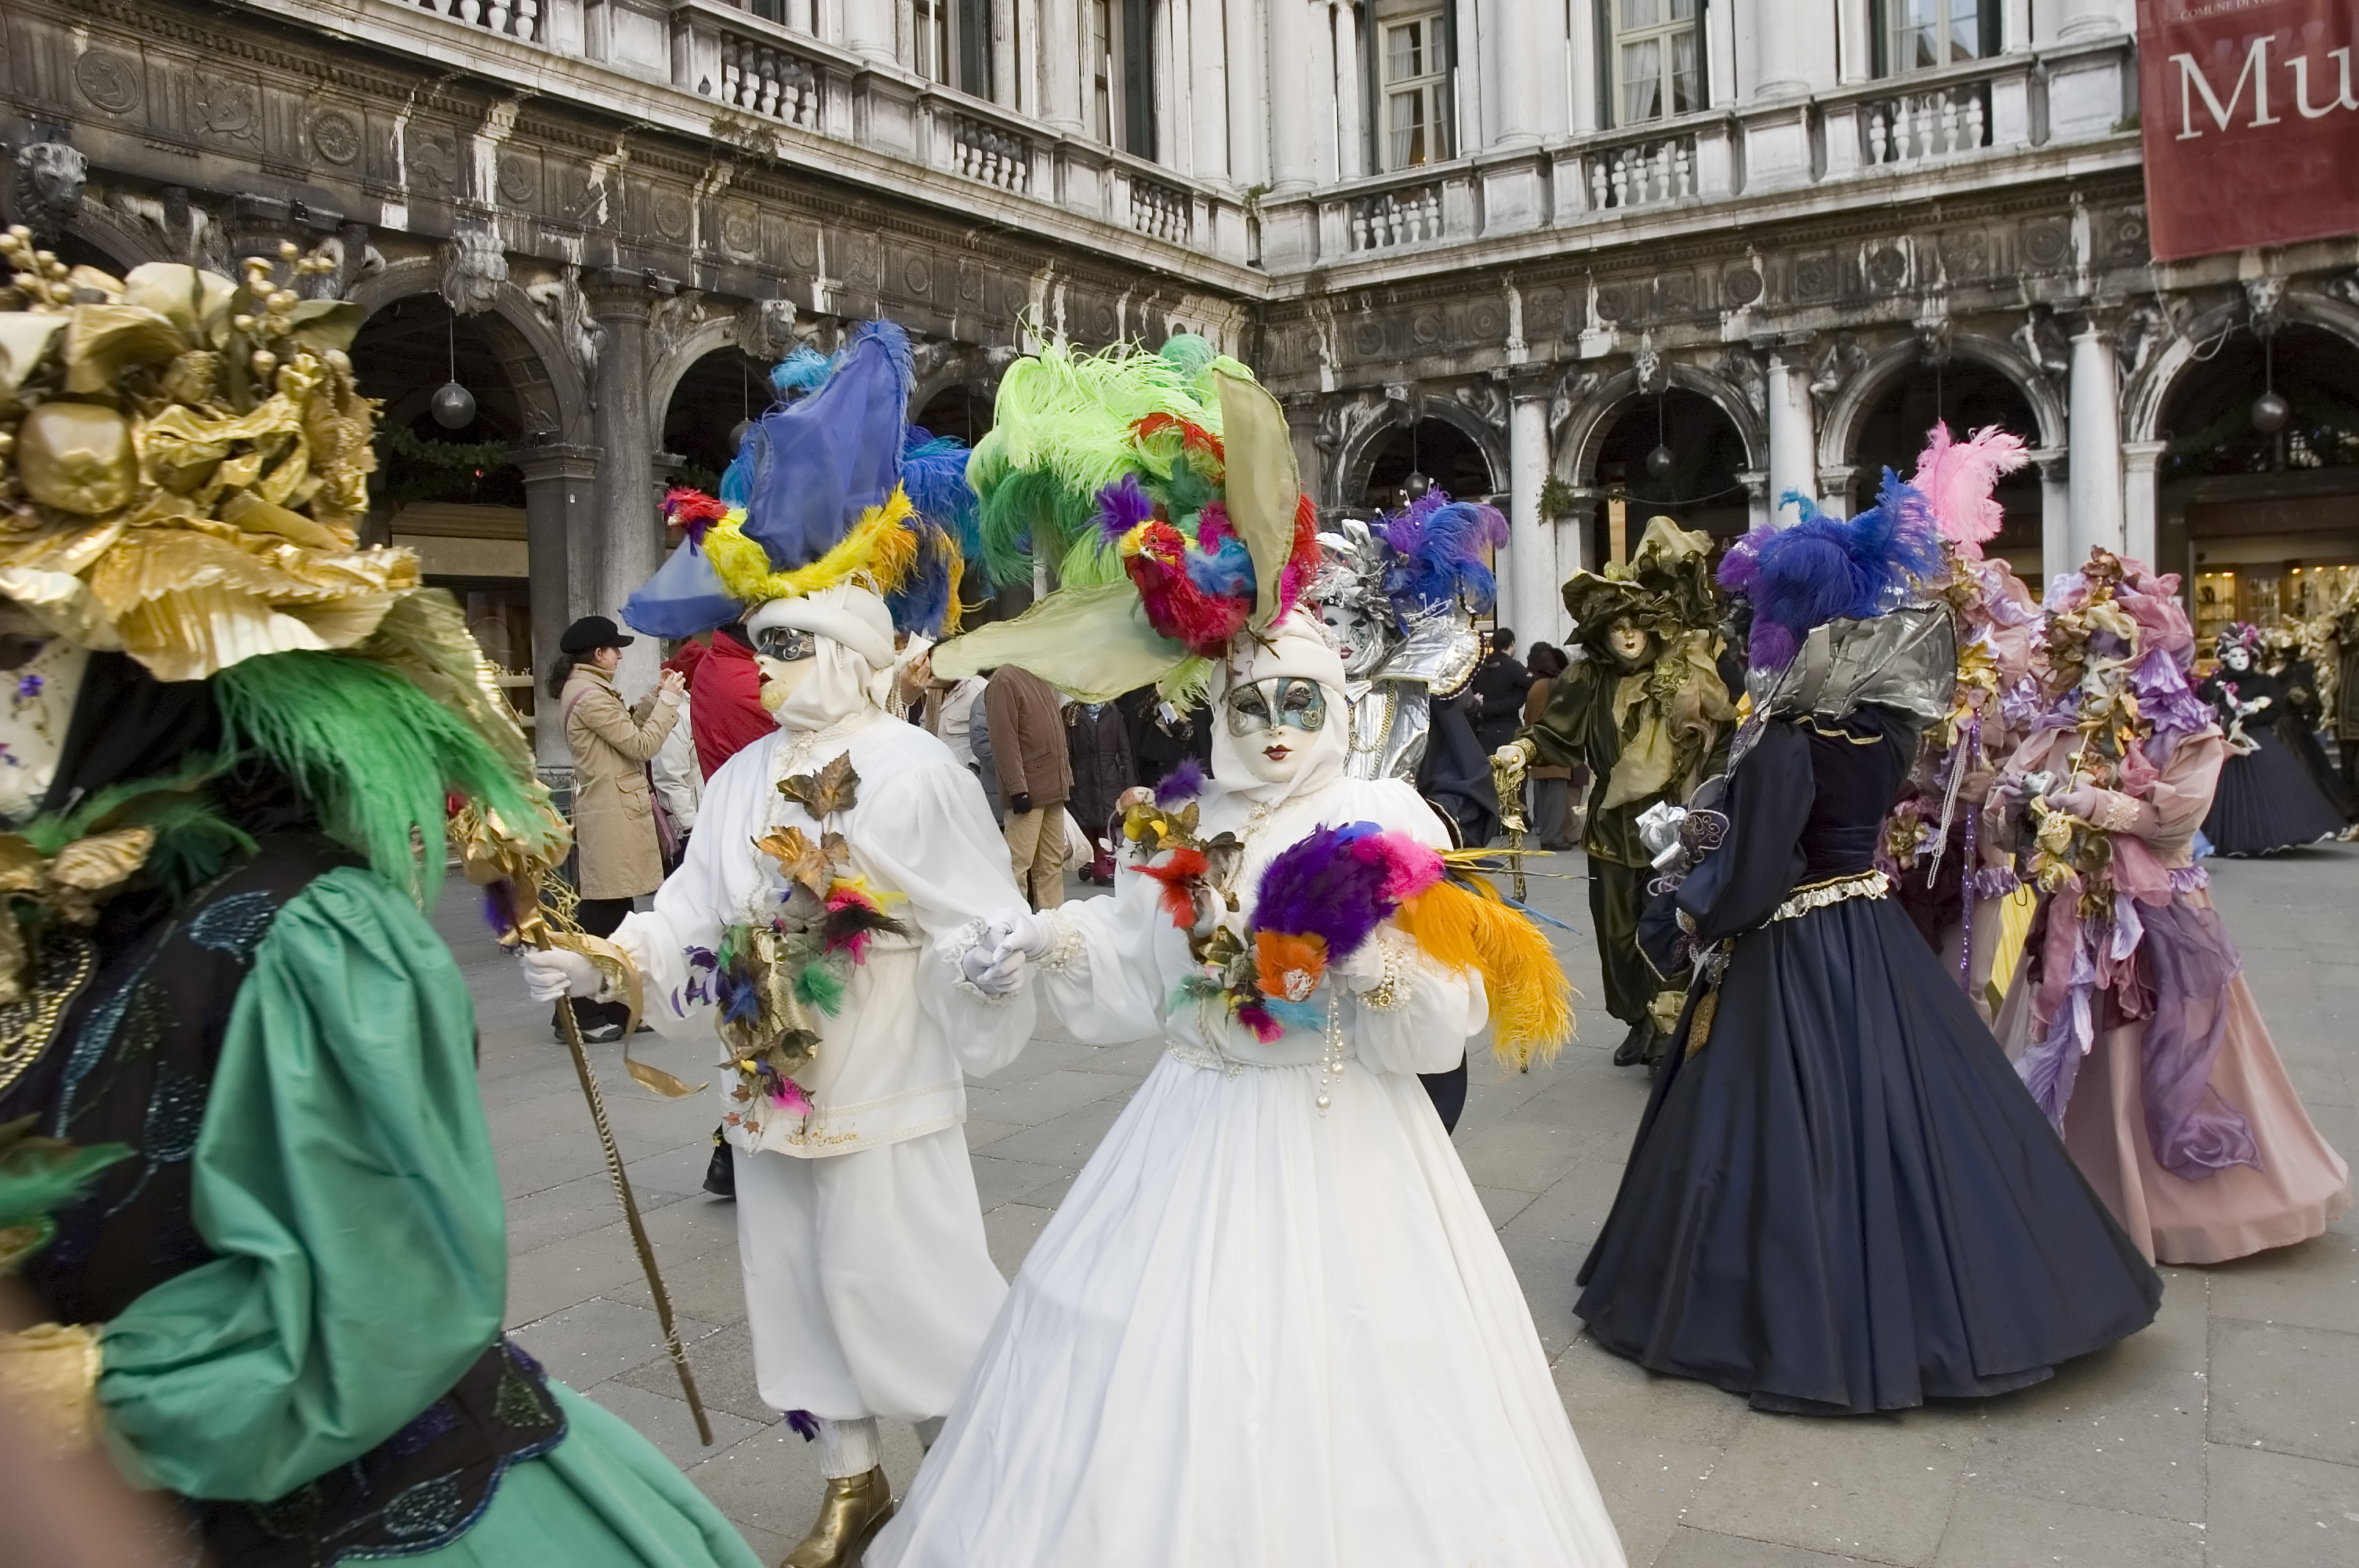 Carnaval de Venise : Location de costume traditionnel, déjeuner